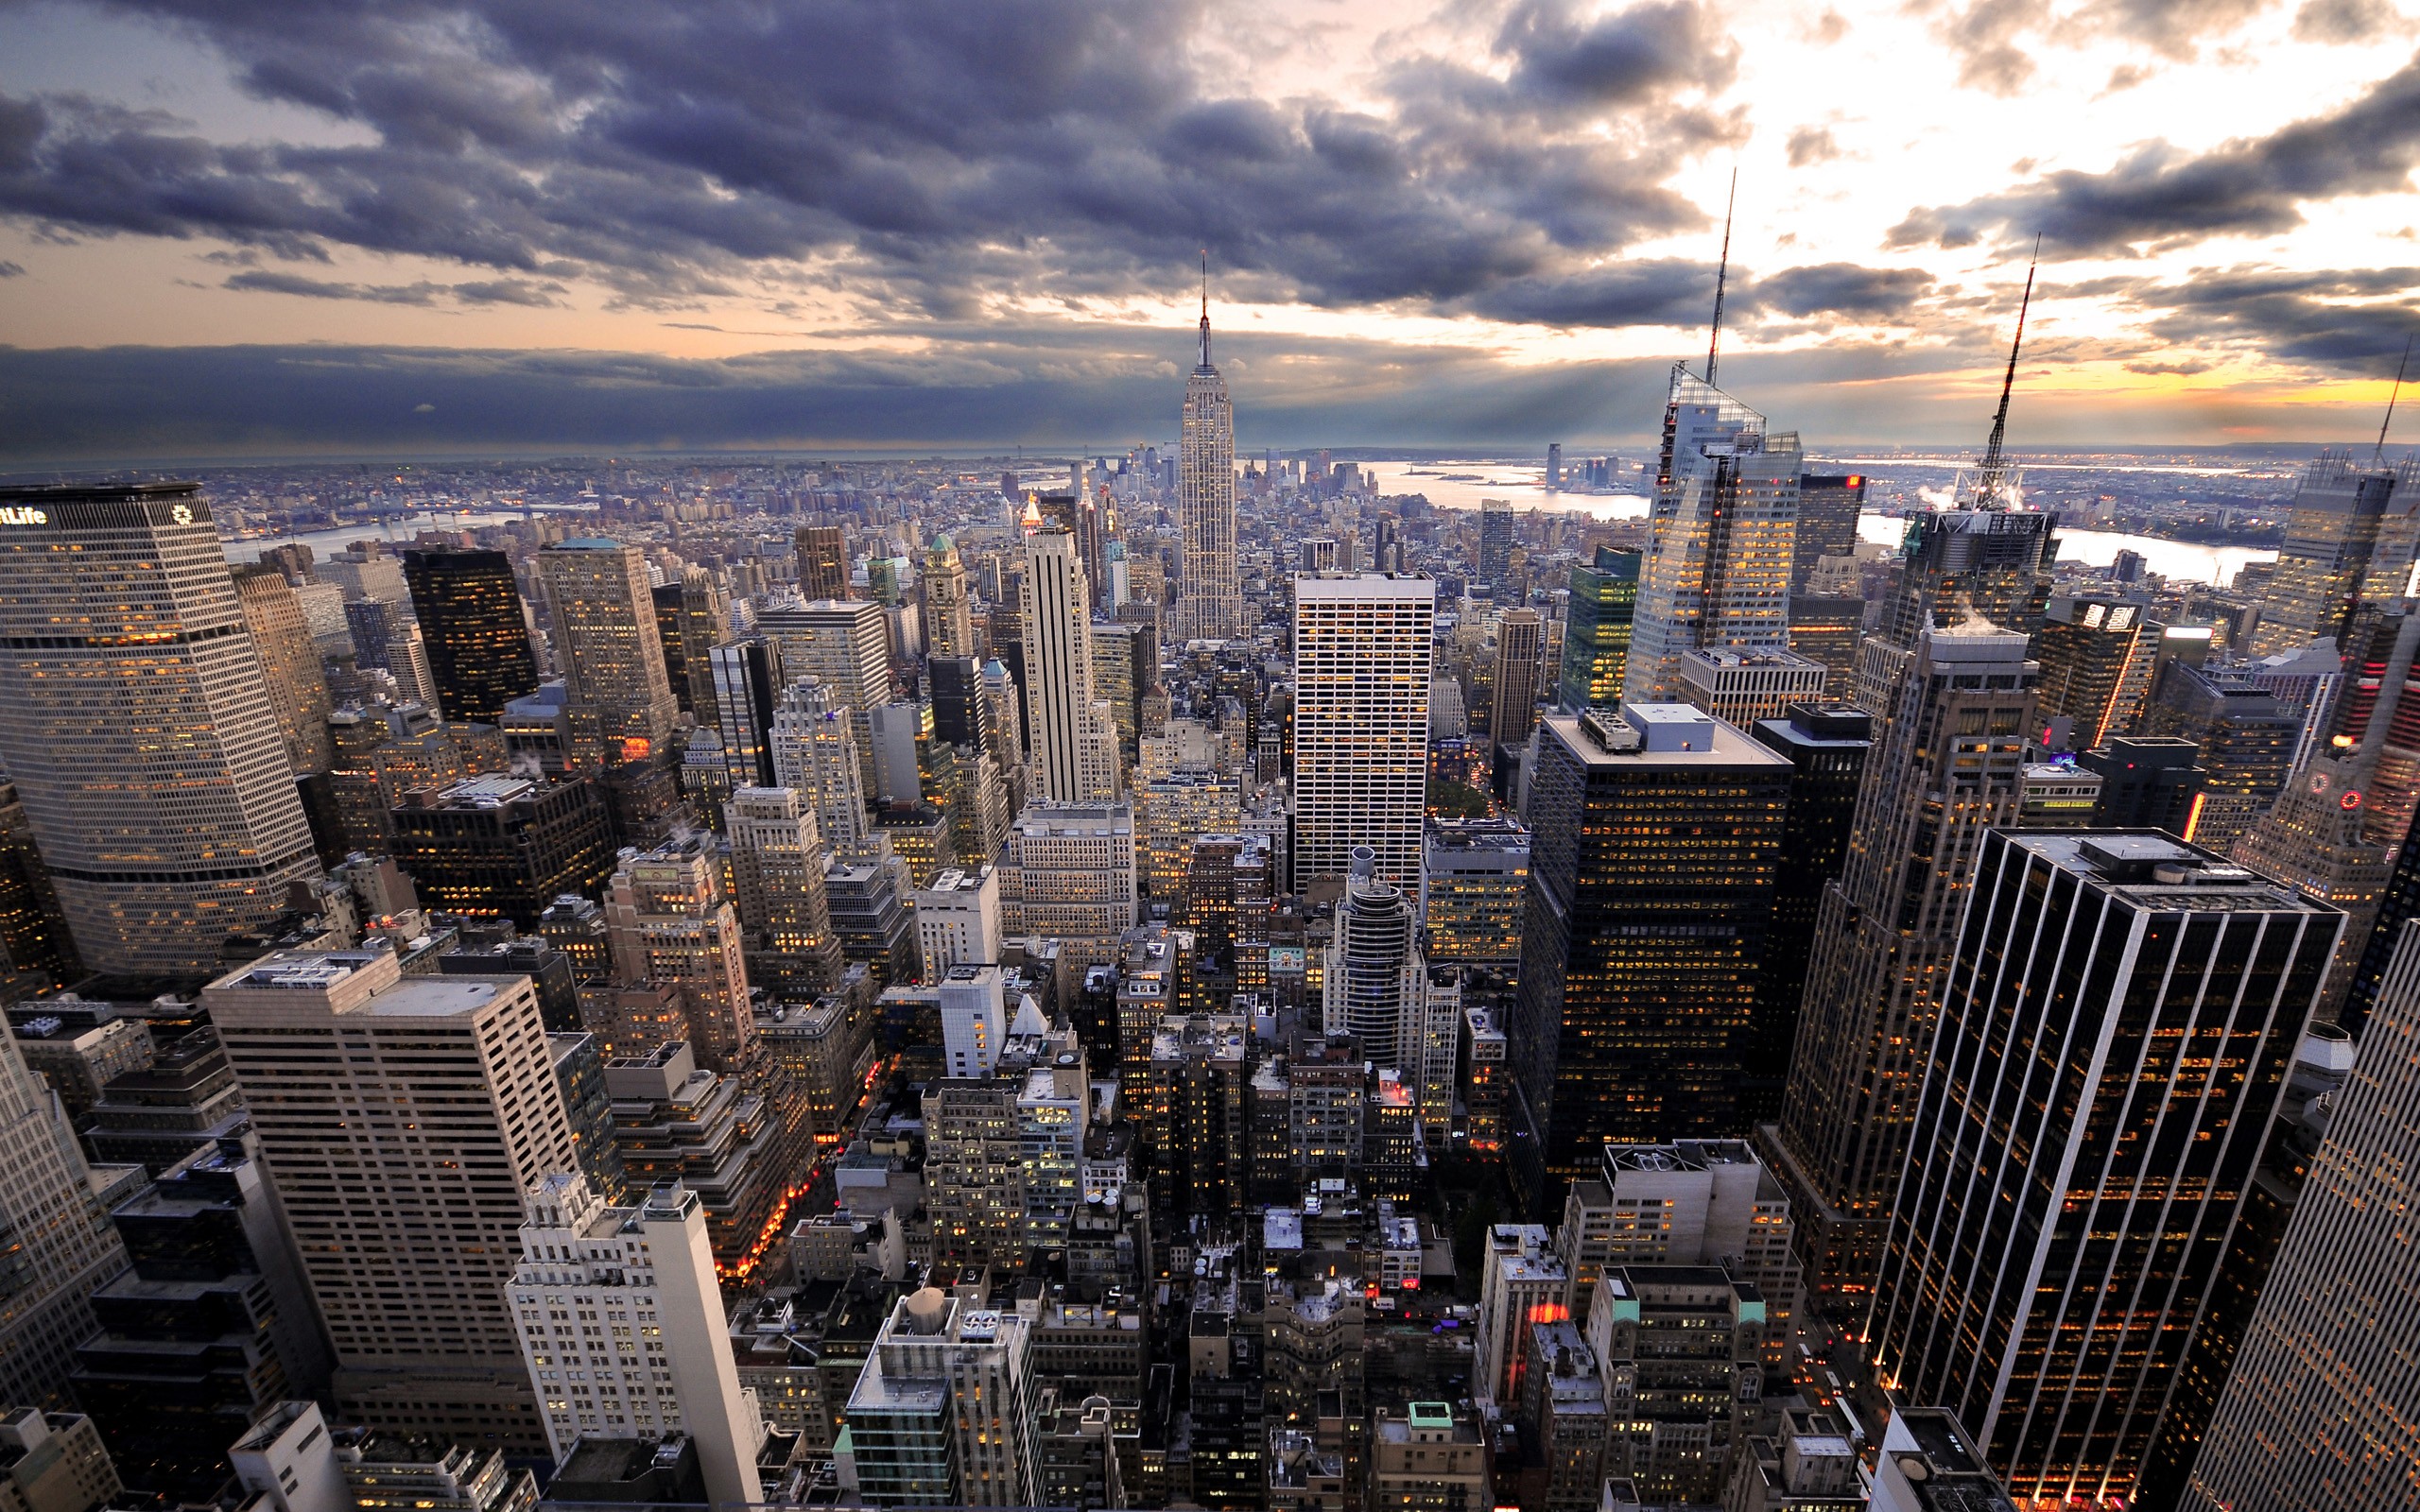 General 2560x1600 city cityscape New York City skyscraper USA clouds sunlight